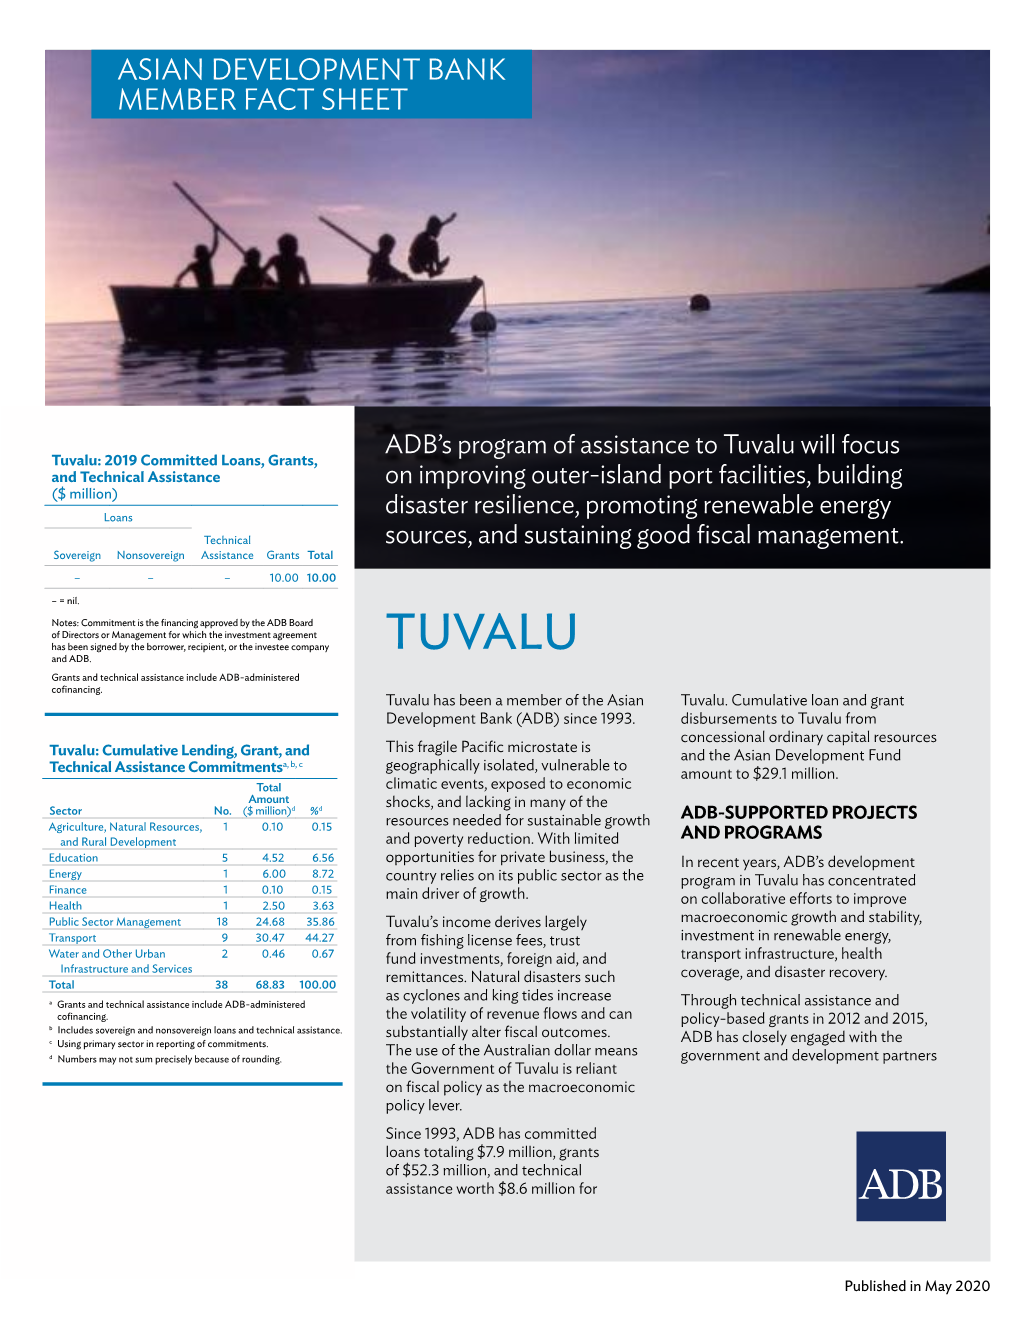 Asian Development Bank and Tuvalu: Fact Sheet